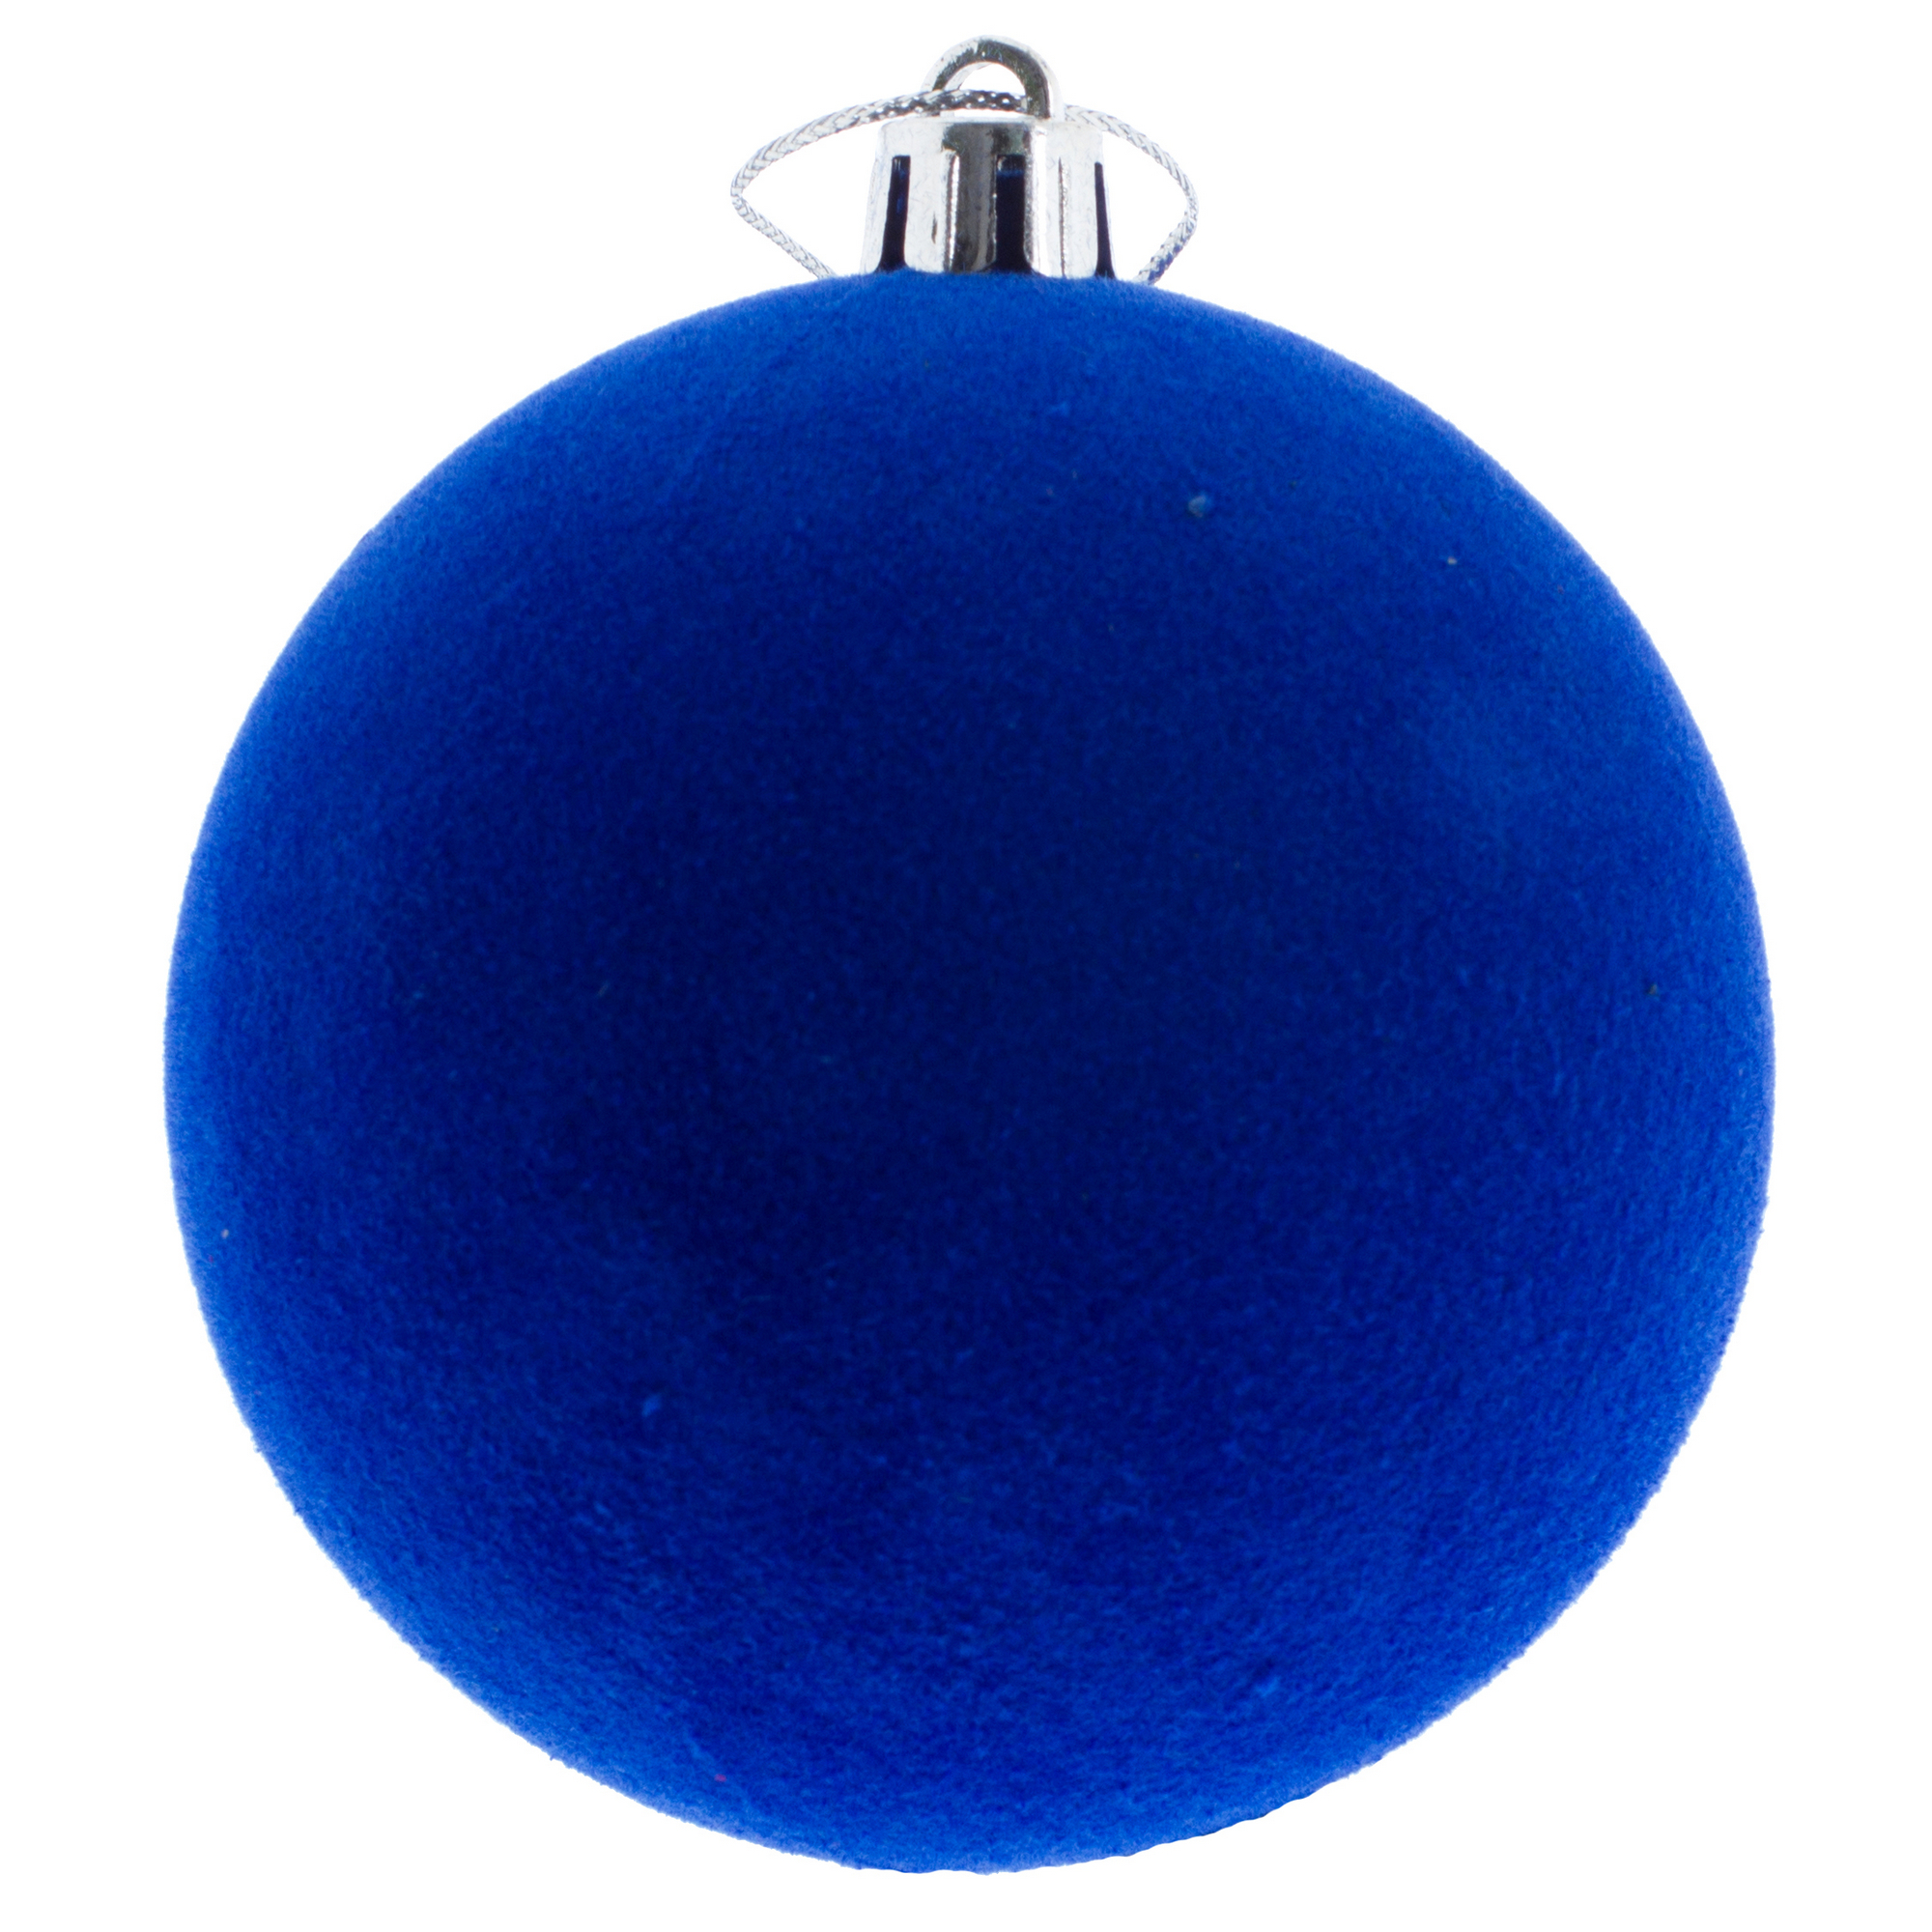 Синие шары на елку. Синий елочный шар. Новогодний шар. Синие елочные шары. Новогодний шар (синий).